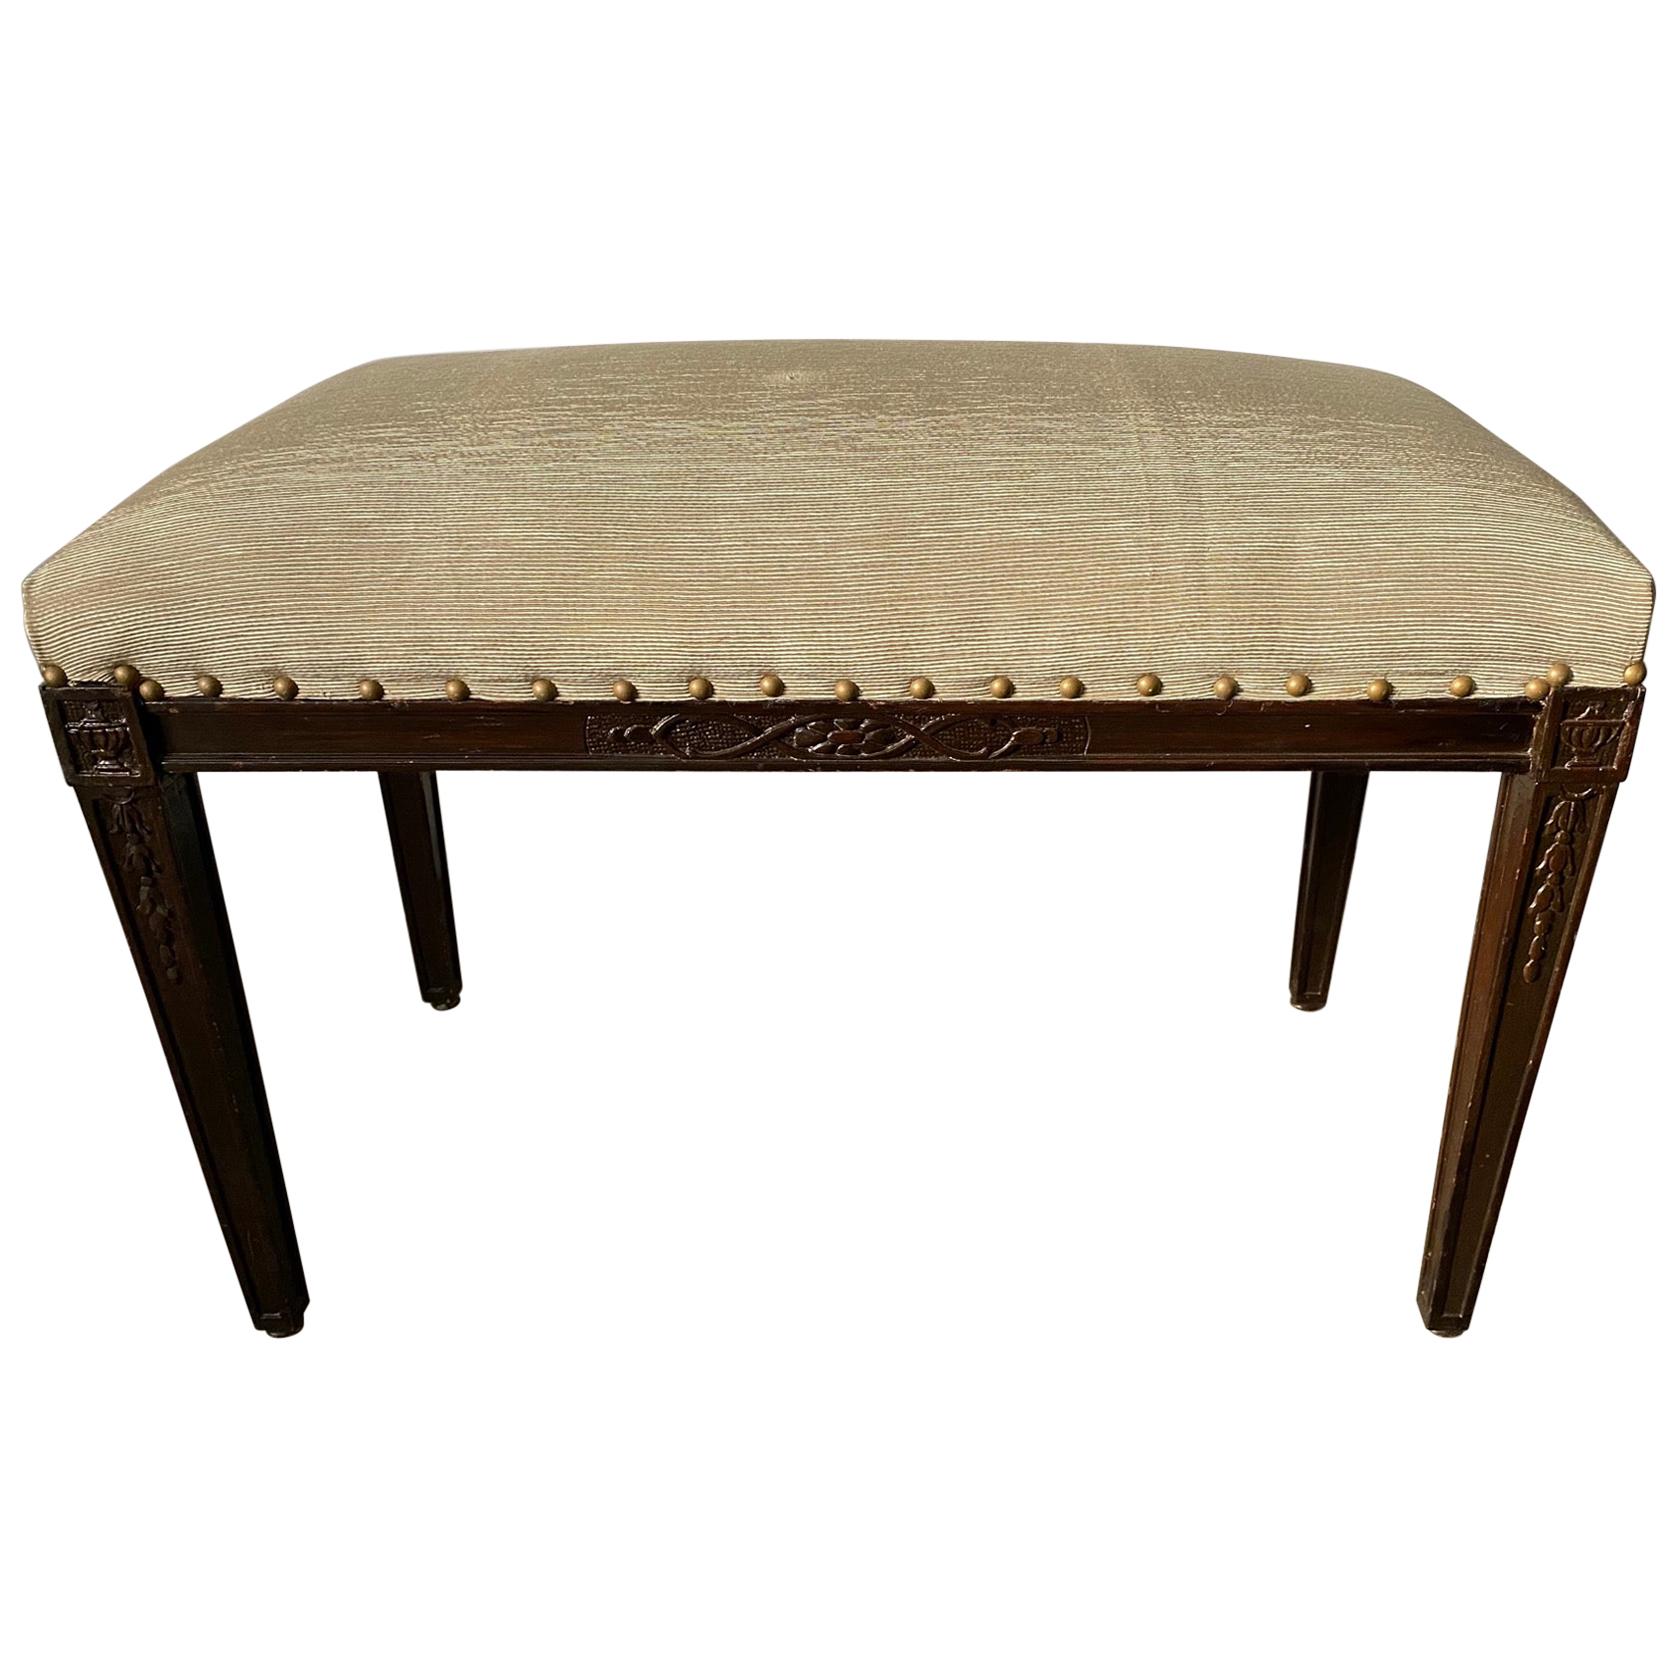 Regency Style Upholstered Bench